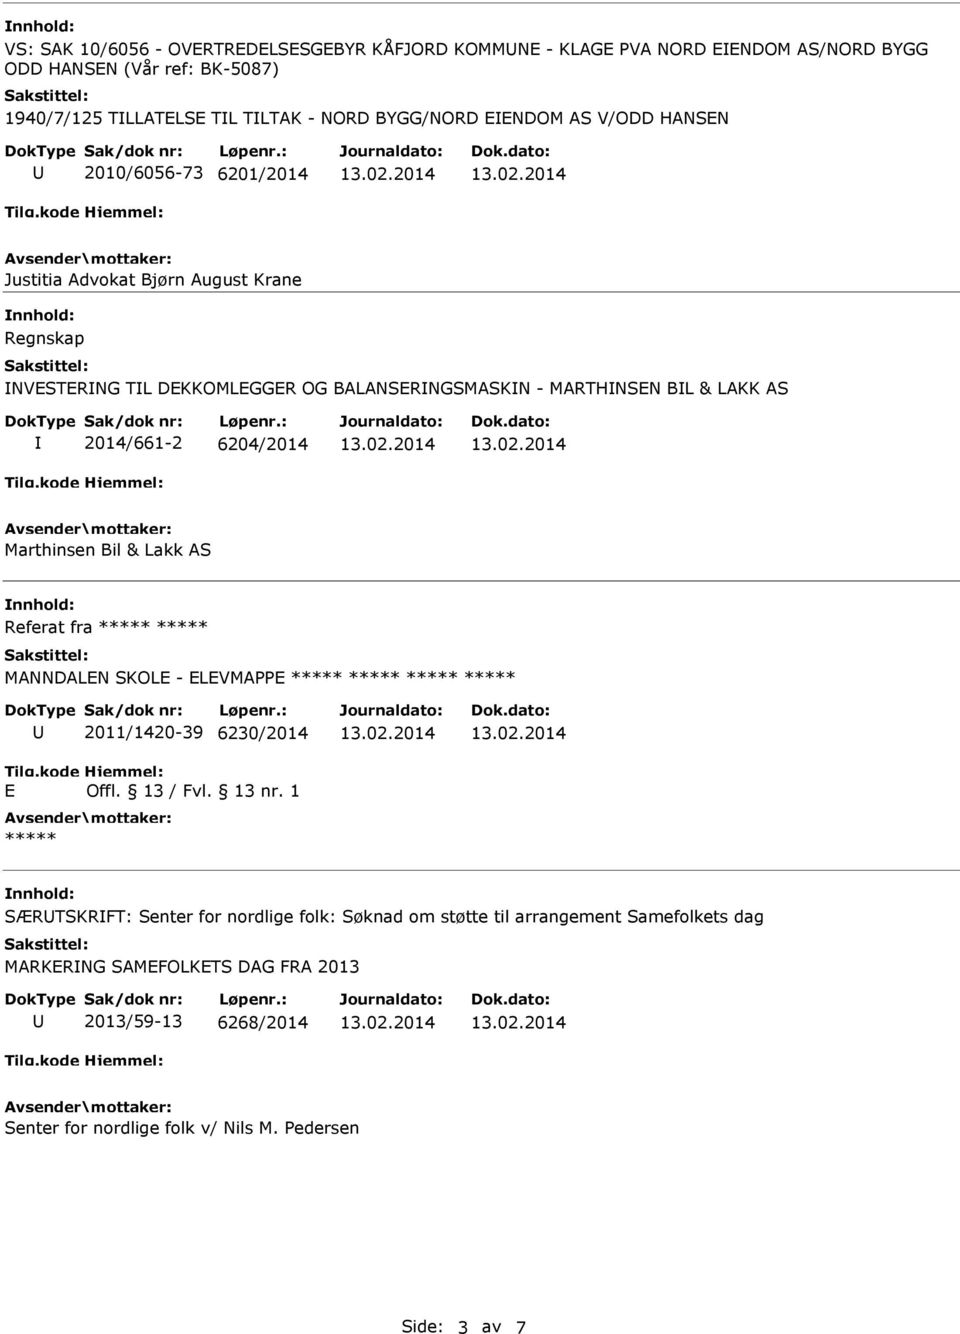 2014/661-2 6204/2014 Marthinsen Bil & Lakk AS Referat fra MANNDALEN SKOLE - ELEVMAPPE E 2011/1420-39 6230/2014 Offl. 13 / Fvl. 13 nr.